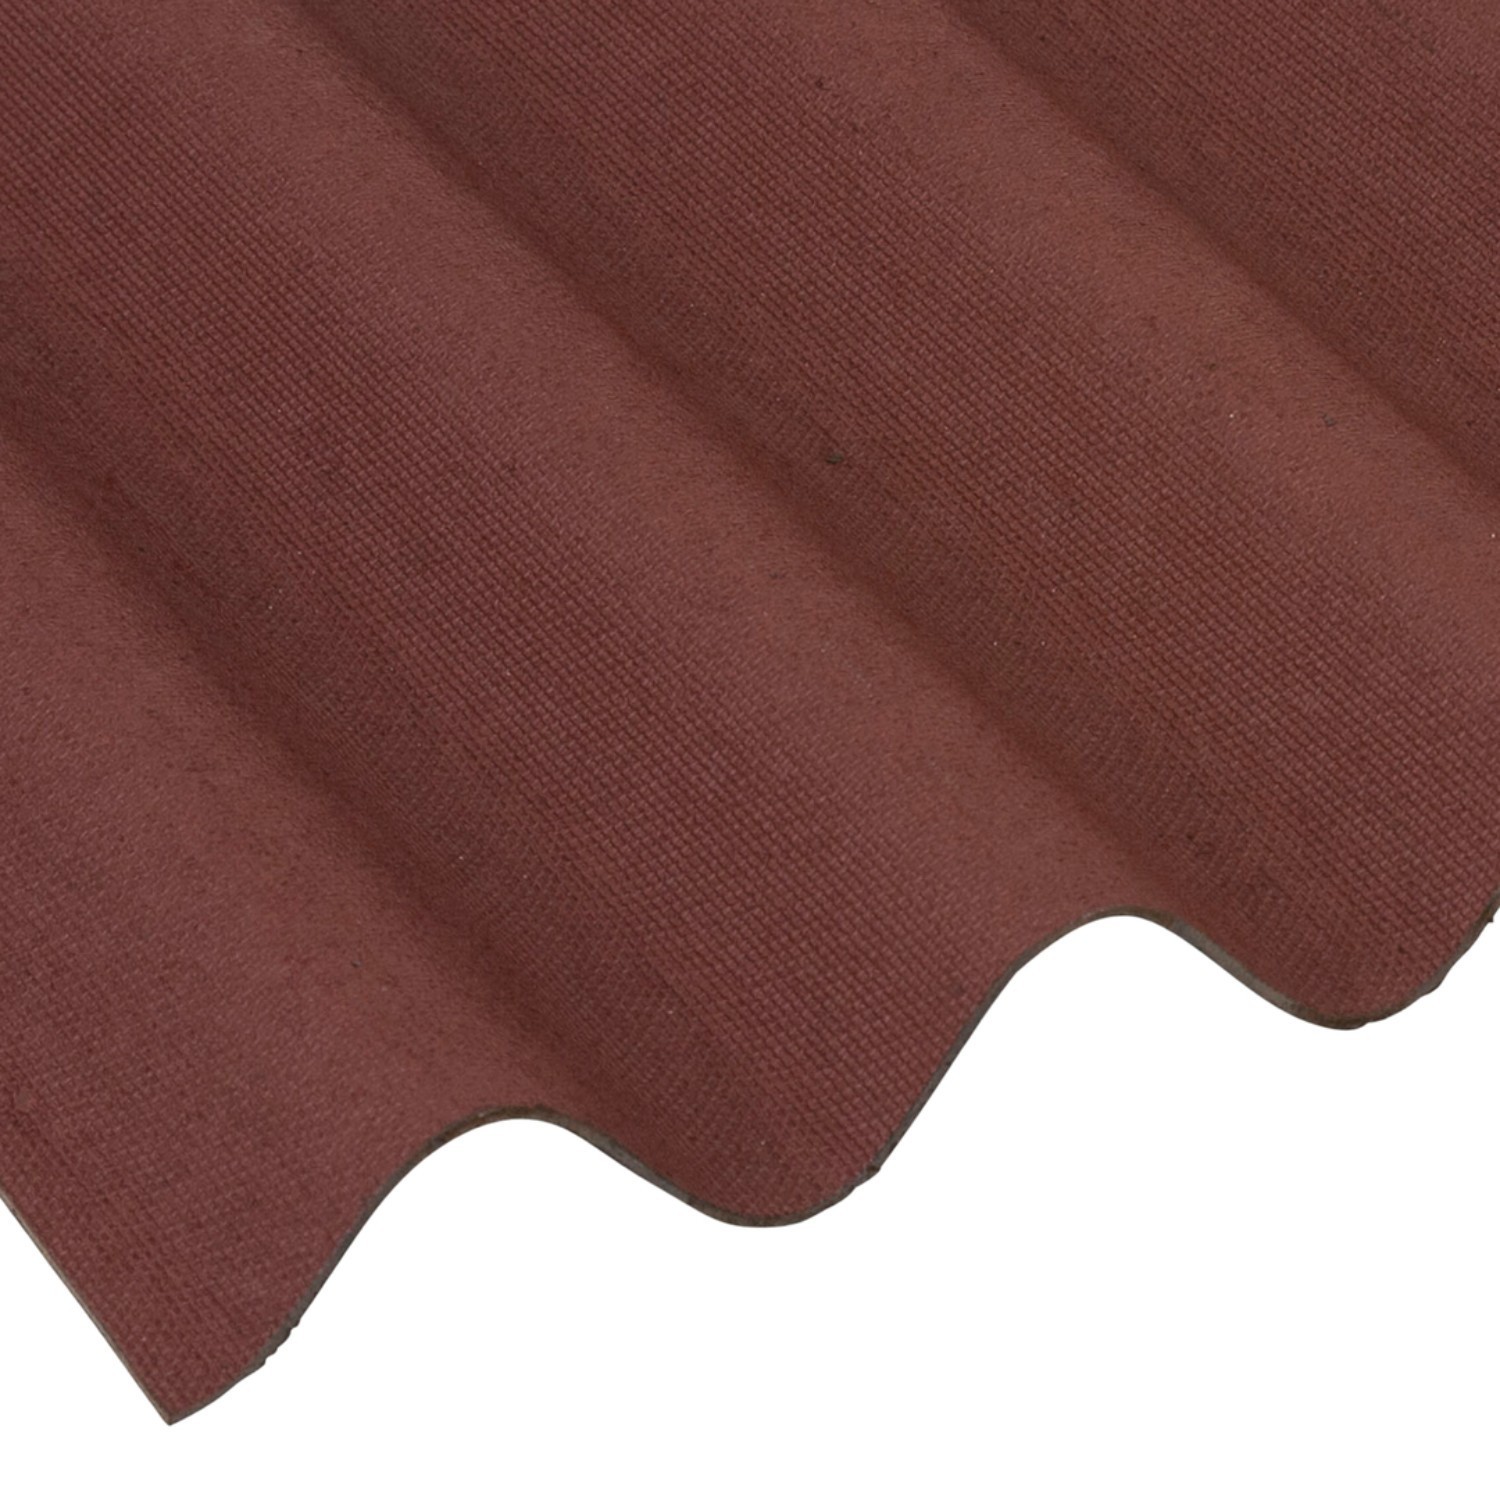 Onduline - Red Corrugated Bitumen Roof Sheet (2000 x 950mm)